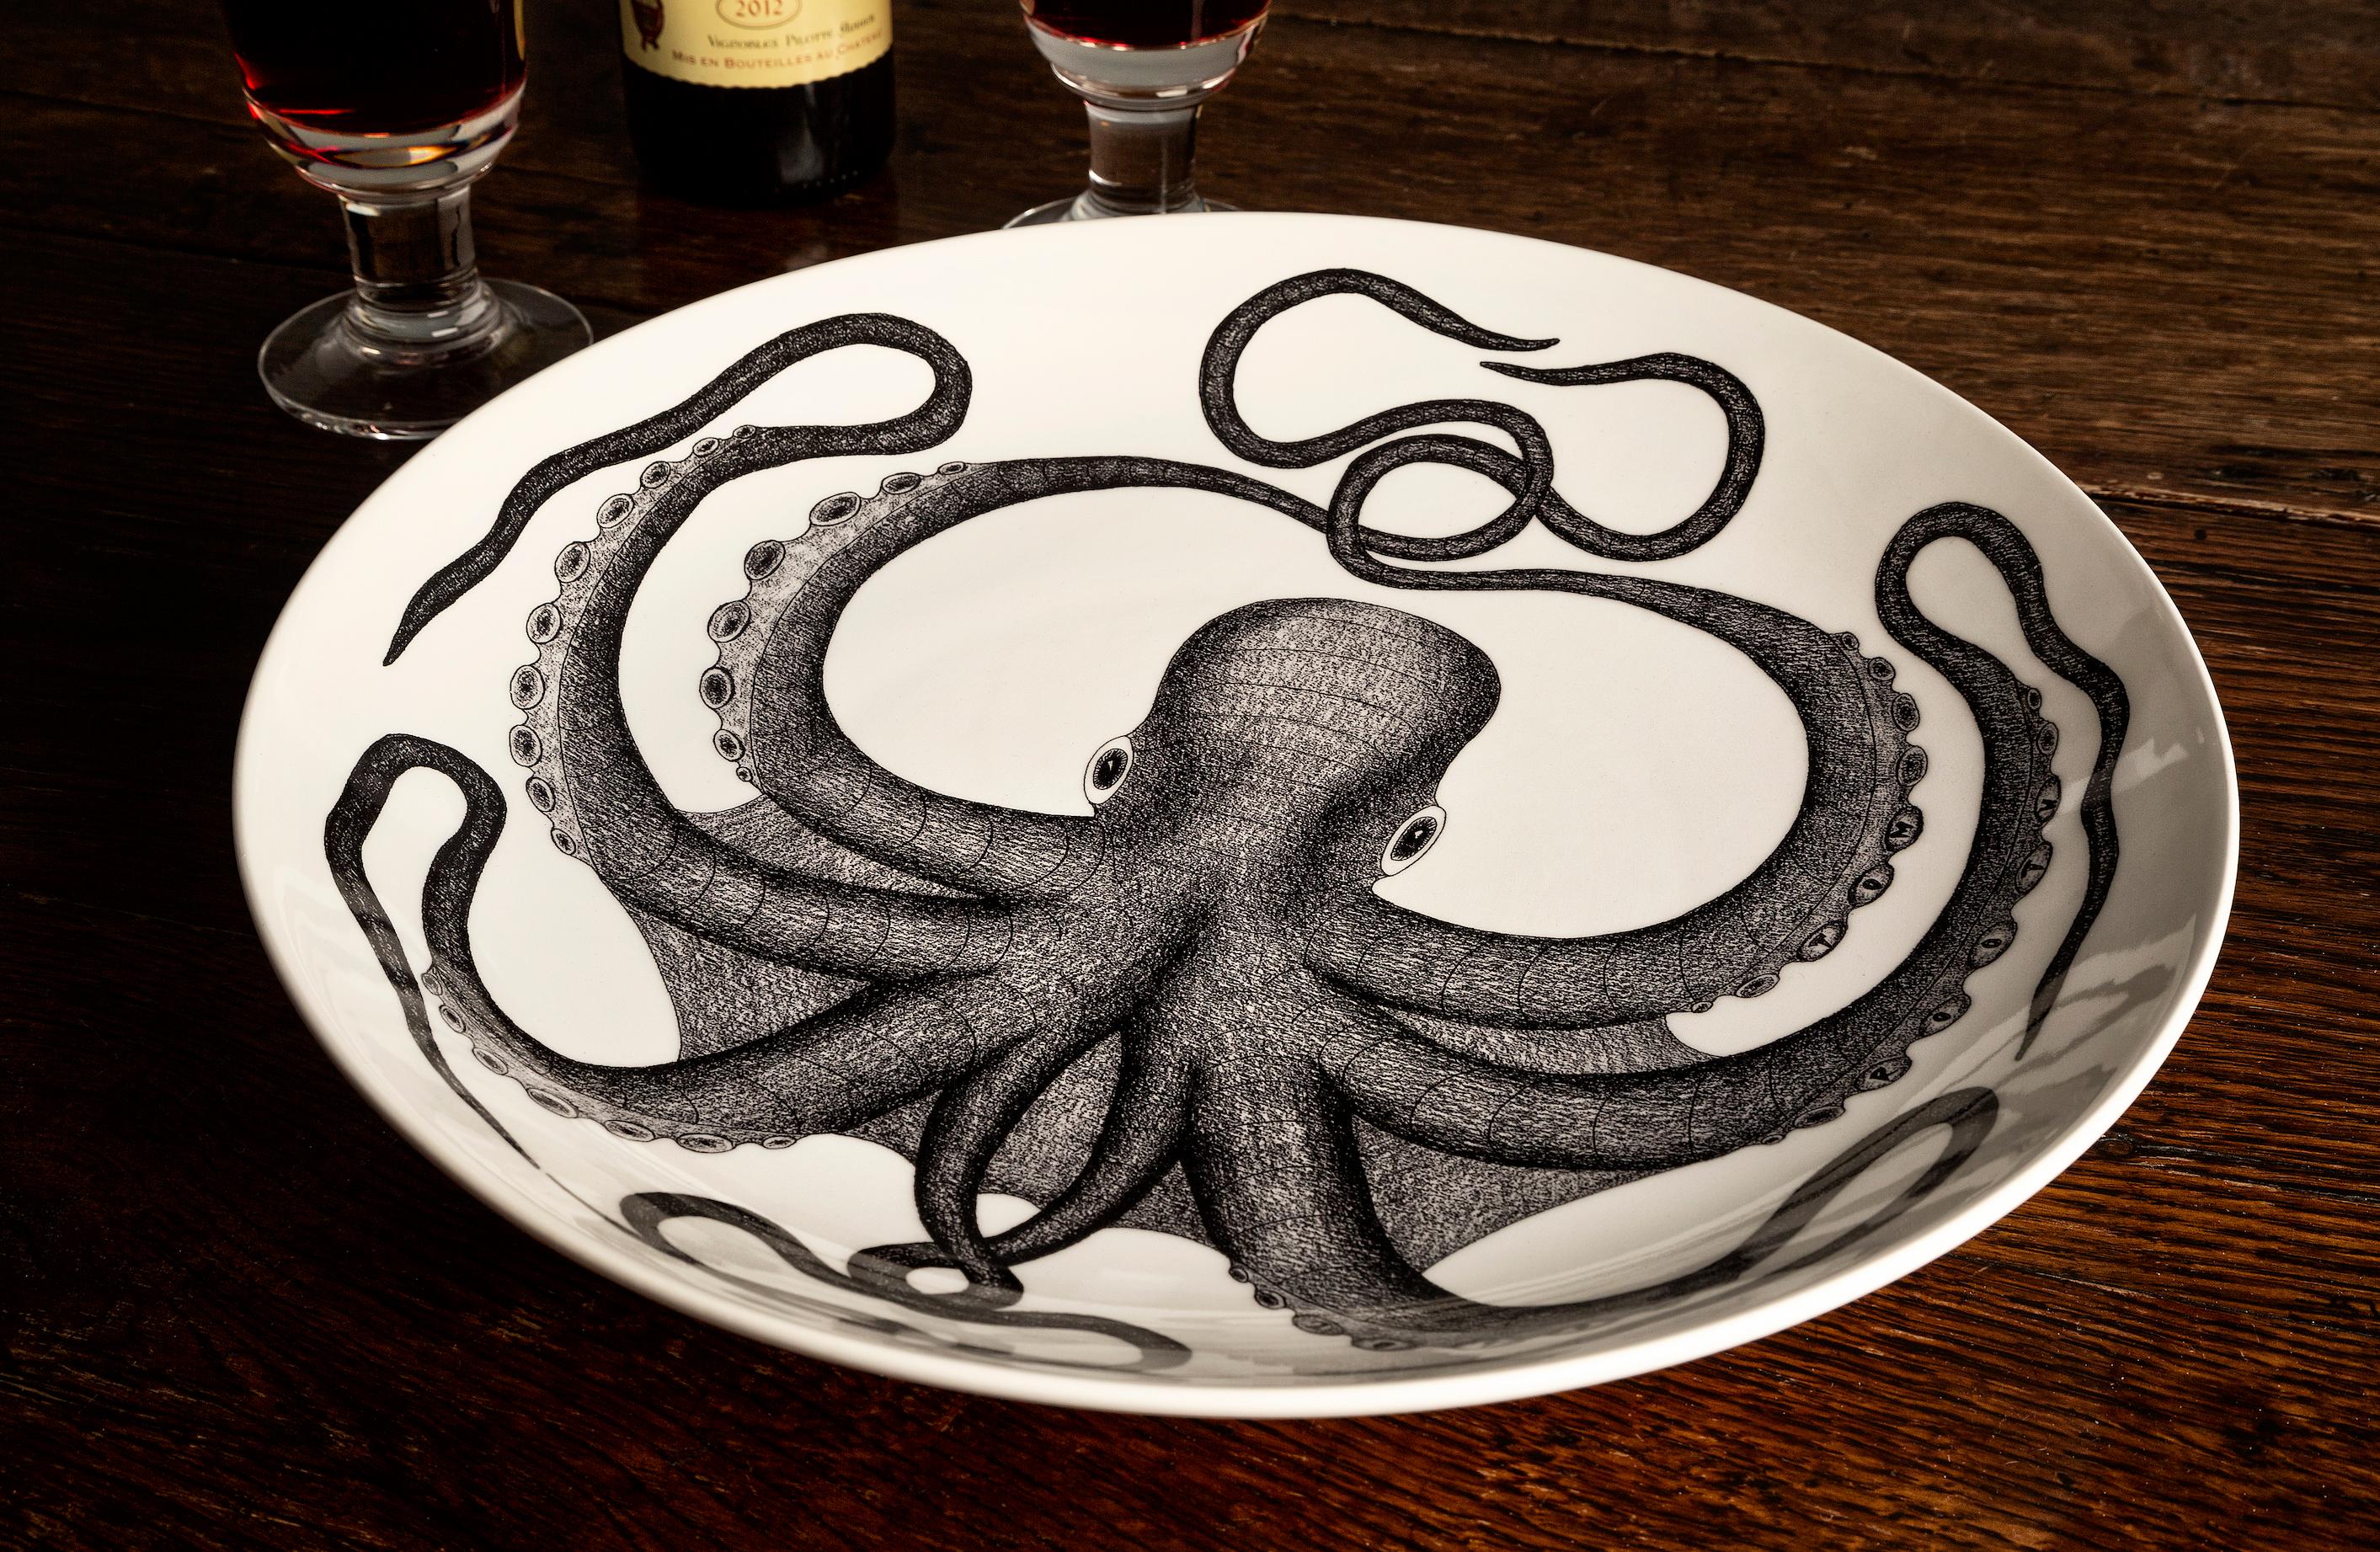 Octoplate - Réalisme Art par Tom Rooth